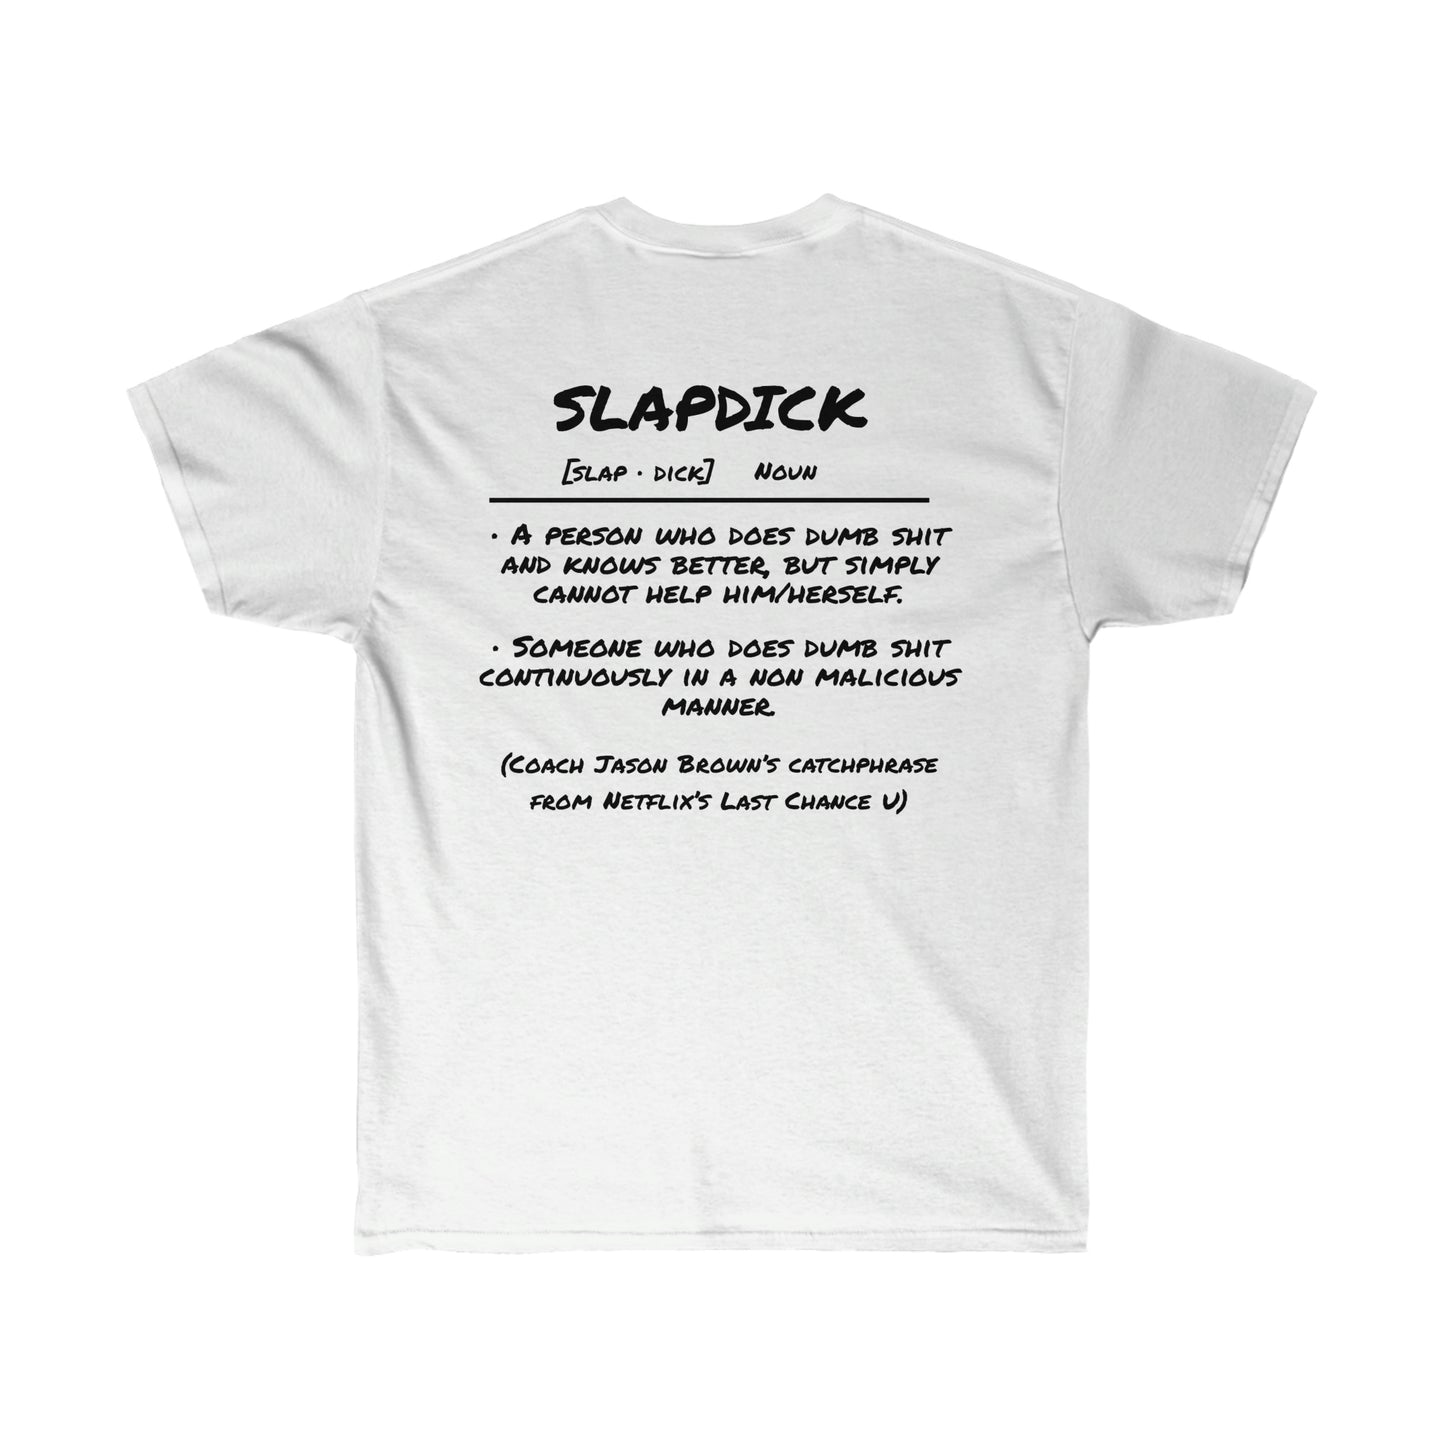 Slapdick Definition Shirt